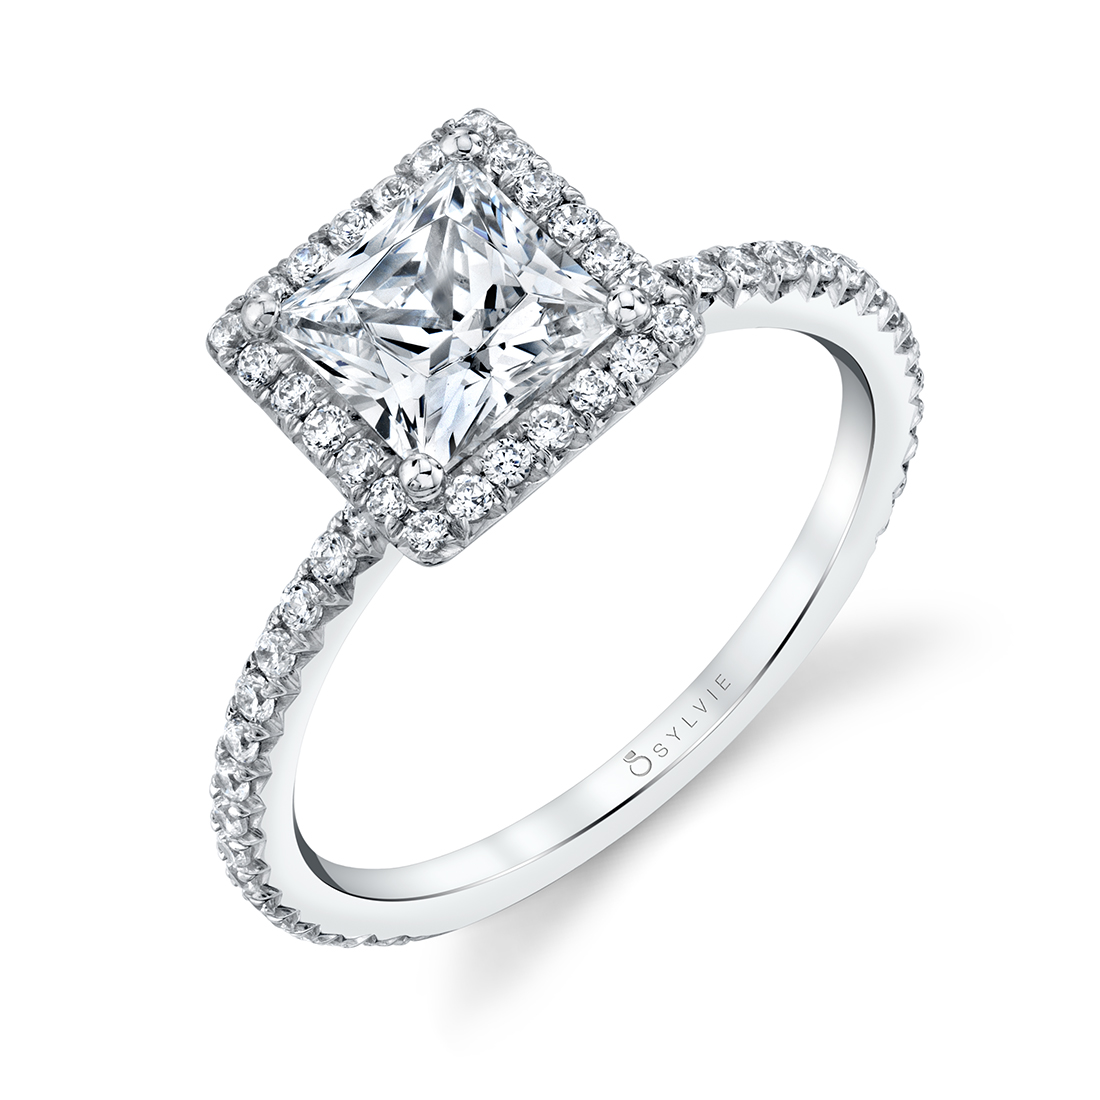 Classic Halo Engagement Ring - Vivian Stuart Benjamin & Co. Jewelry Designs San Diego, CA